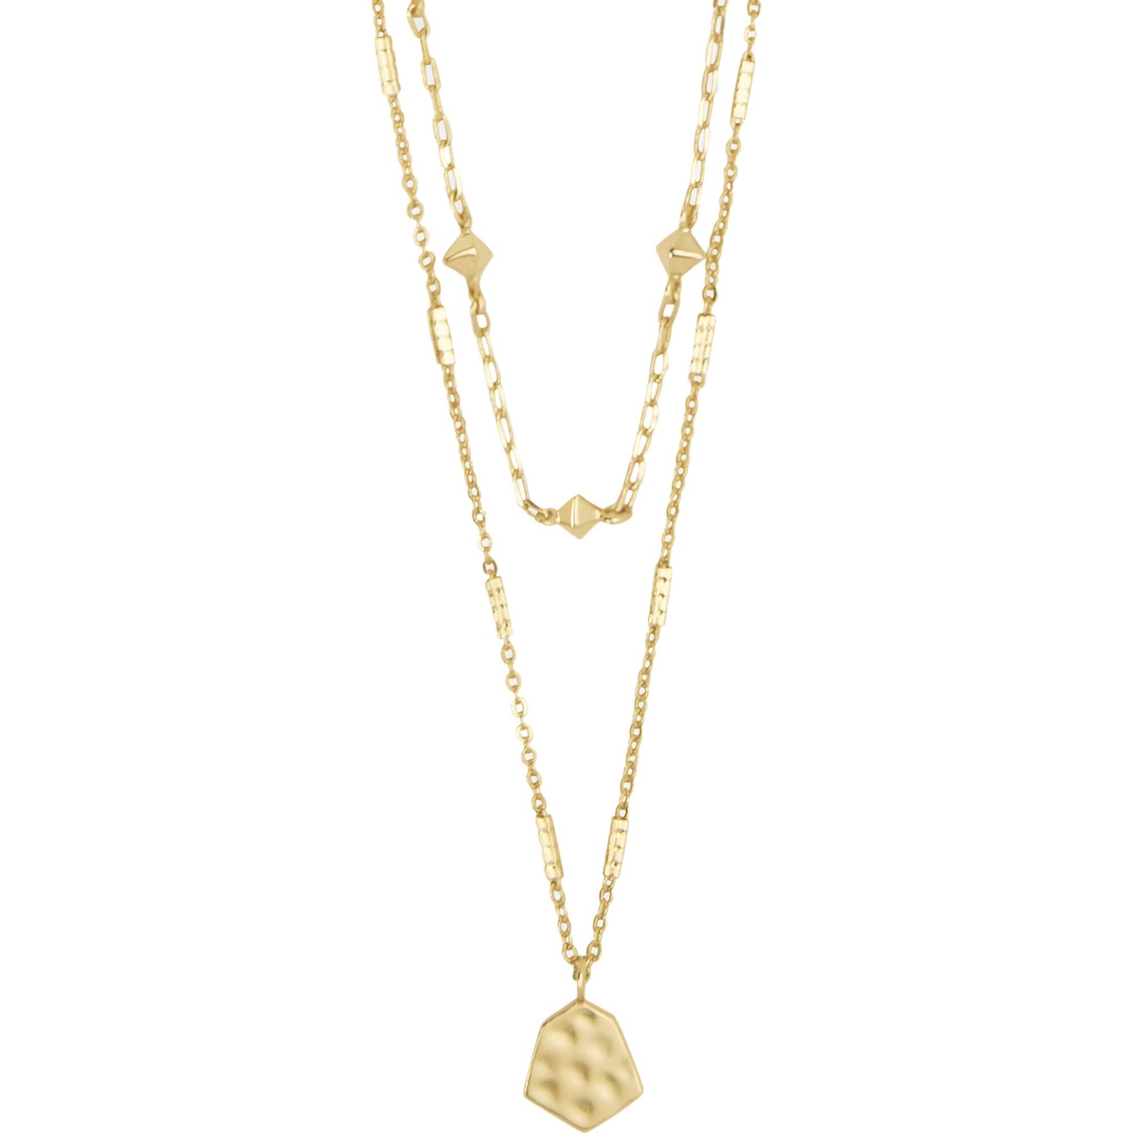 Kendra Scott Clove Multi Strand Necklace - Image 2 of 2